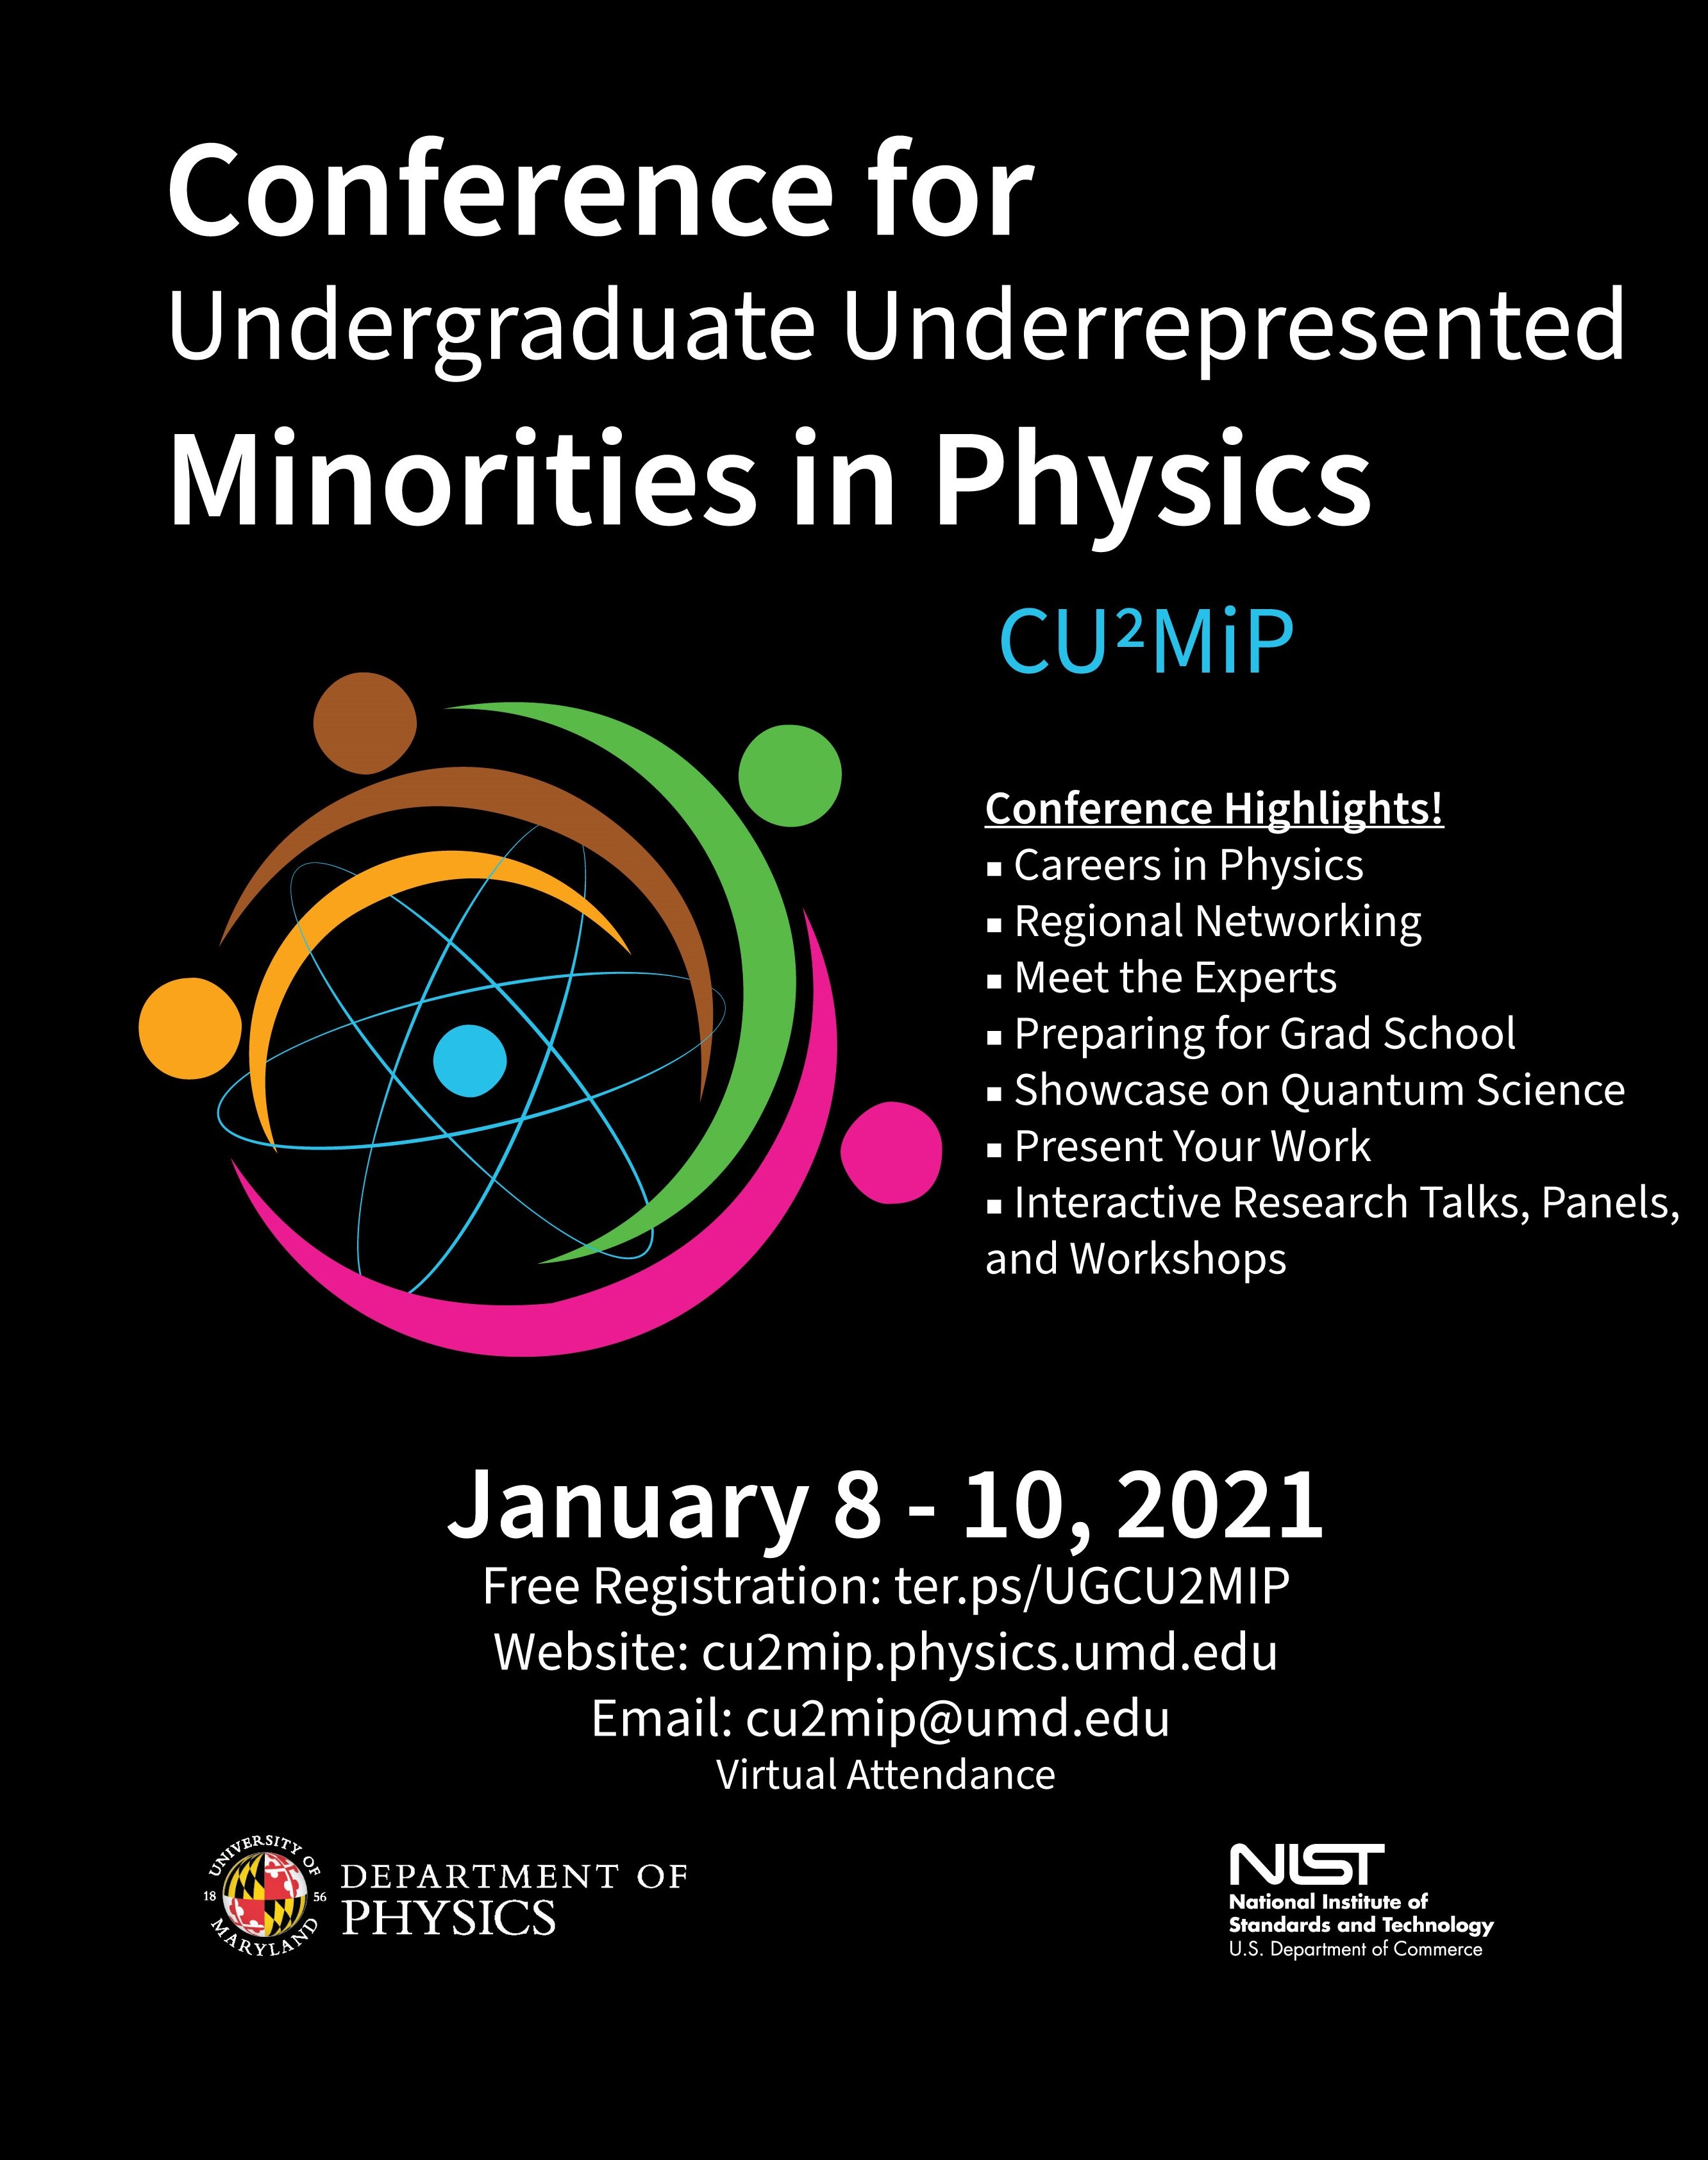 Conference for Undergraduate Underrepresented Minorities in Physics 2021